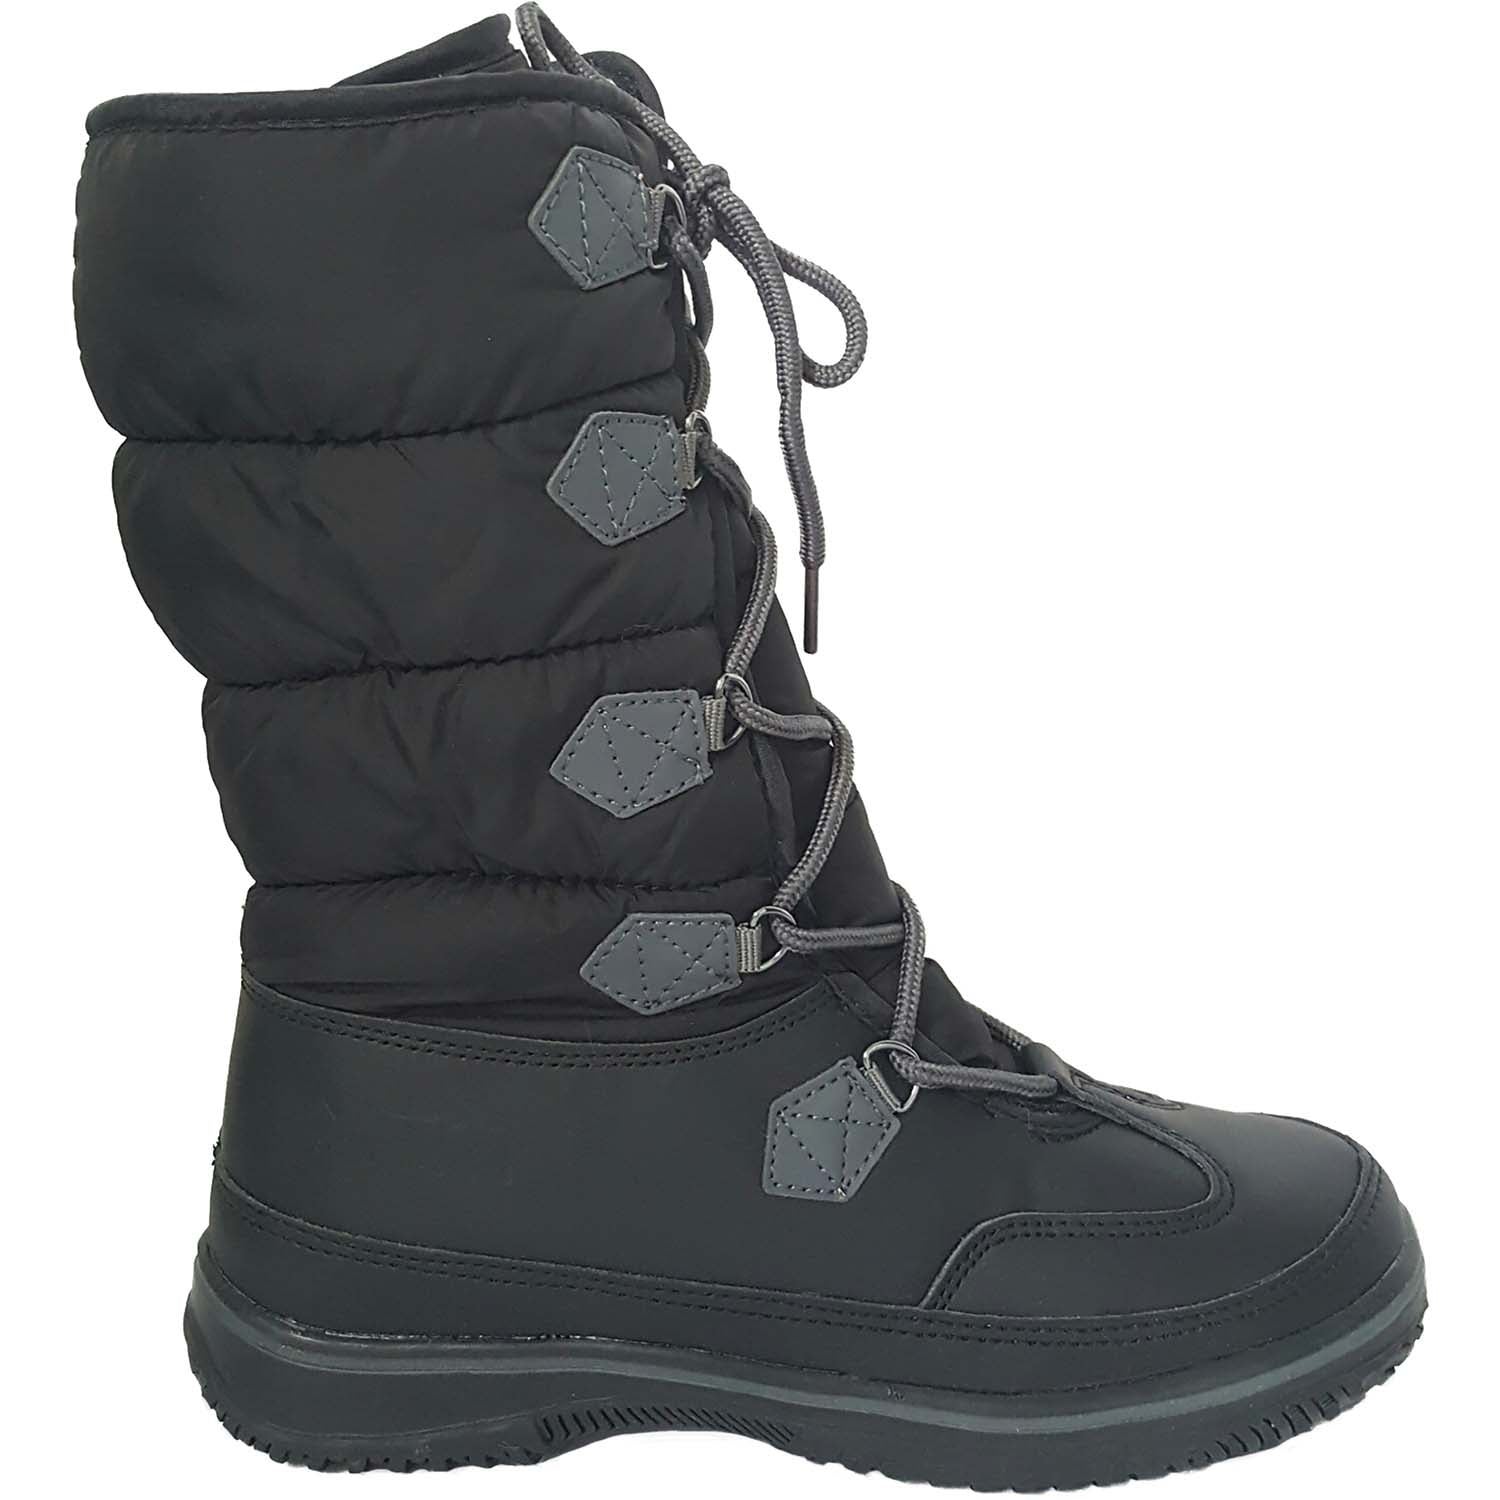 Mens/Womens Snow Boots XTM Predator New In Box Black sizes EU 37 39 